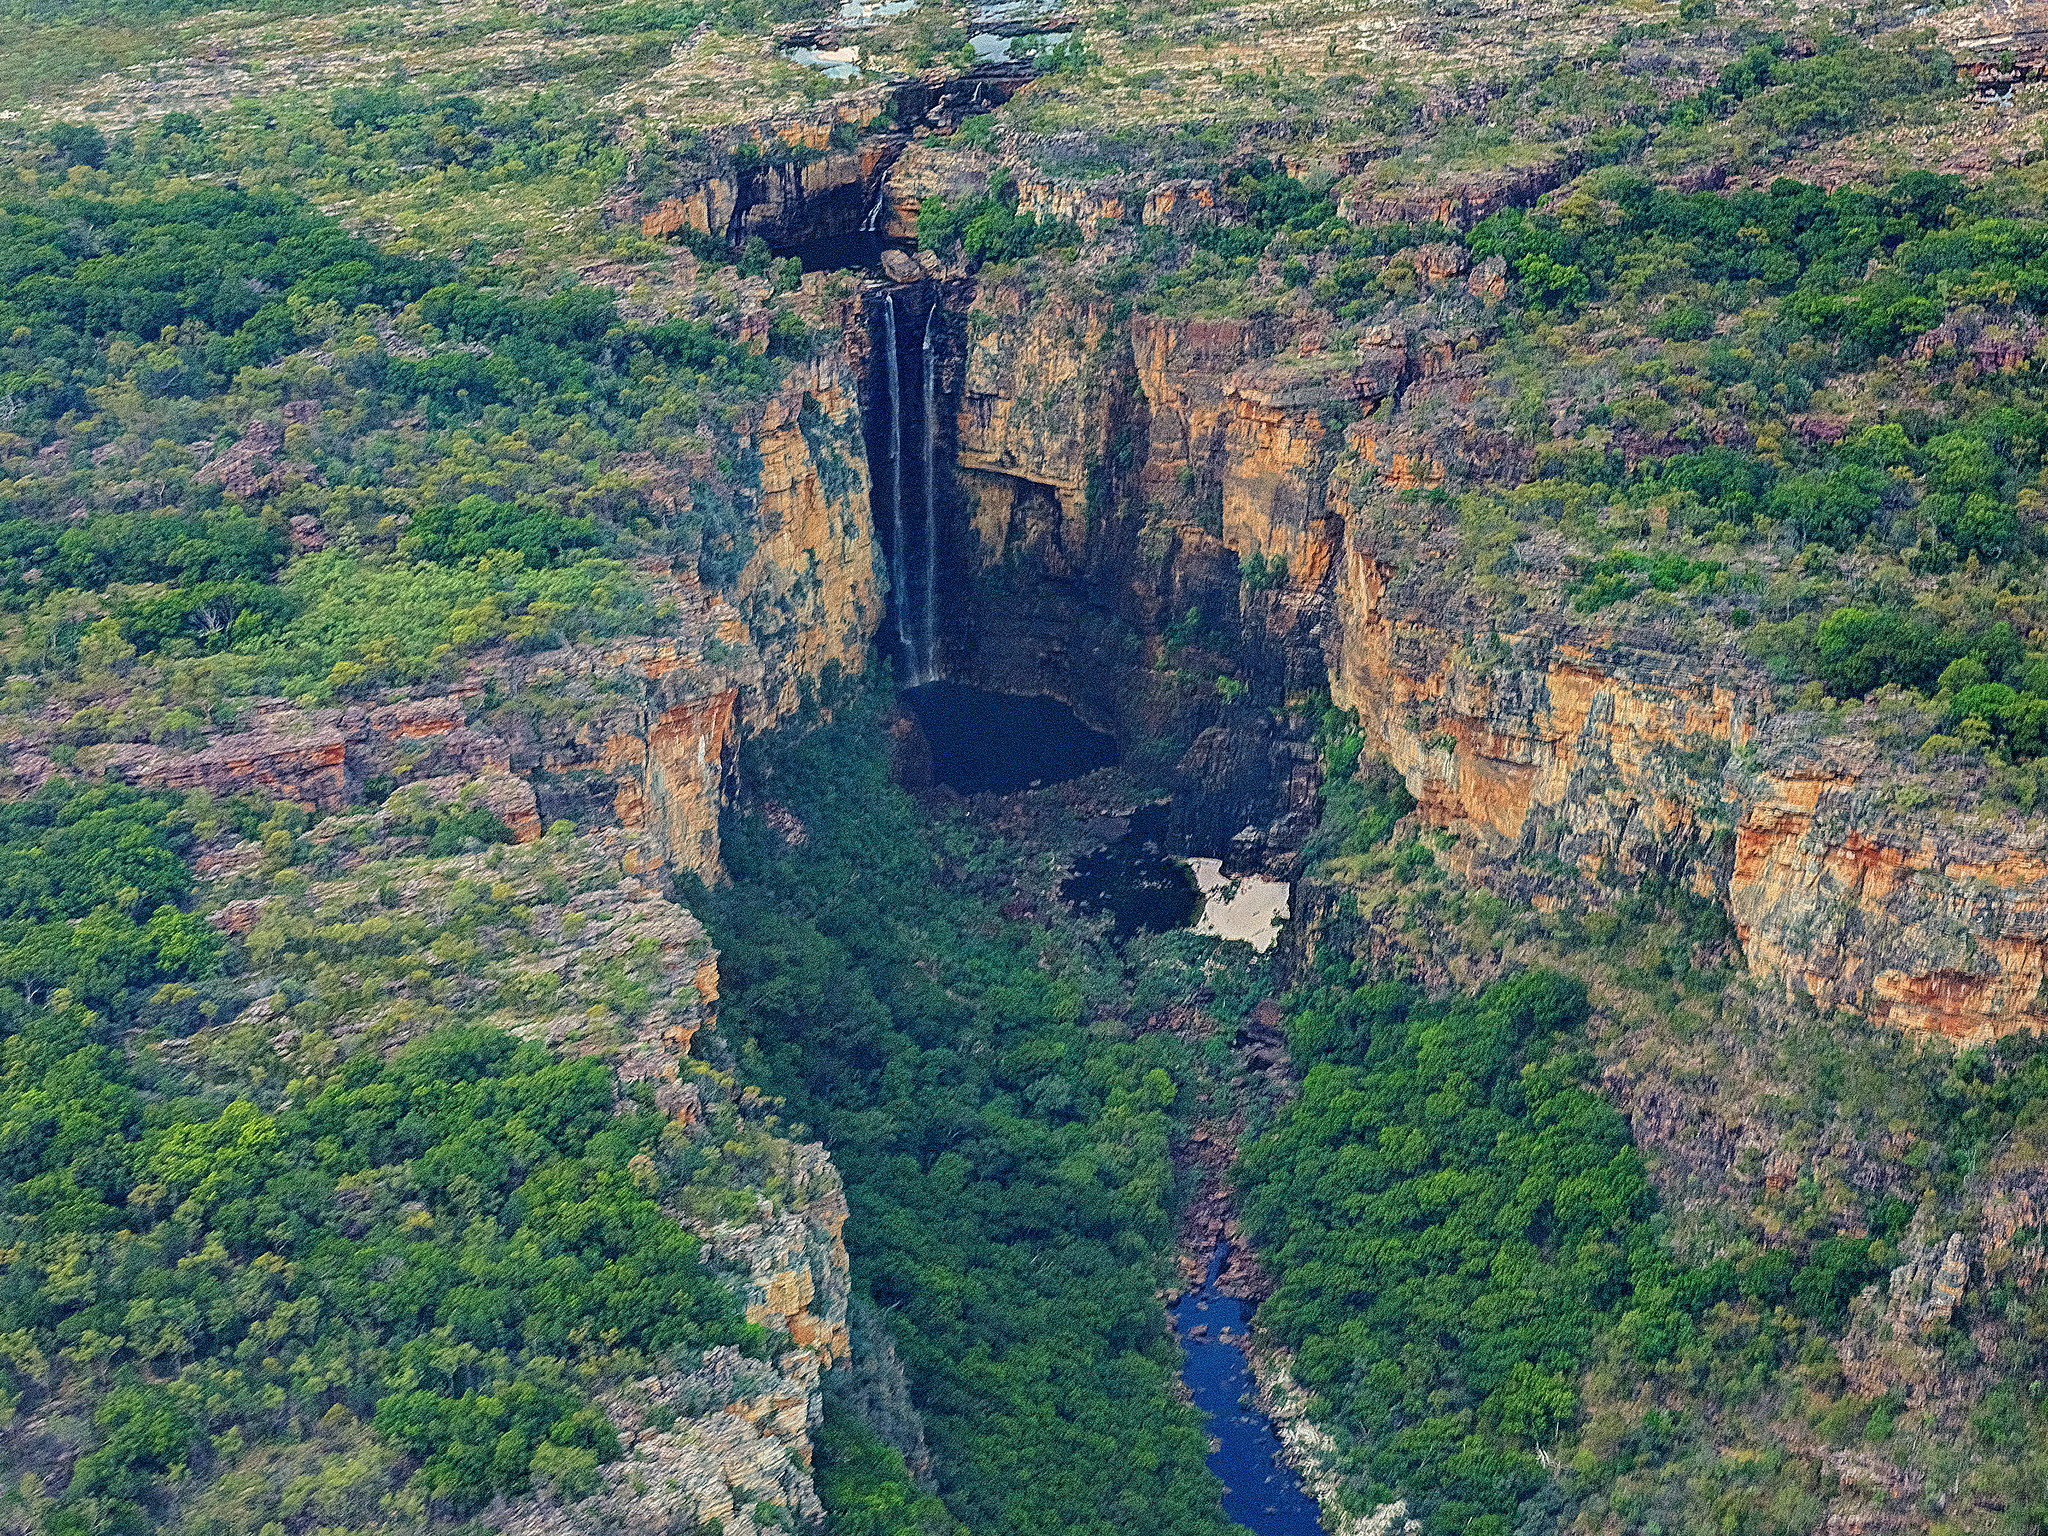 How big is Kakadu National Park?